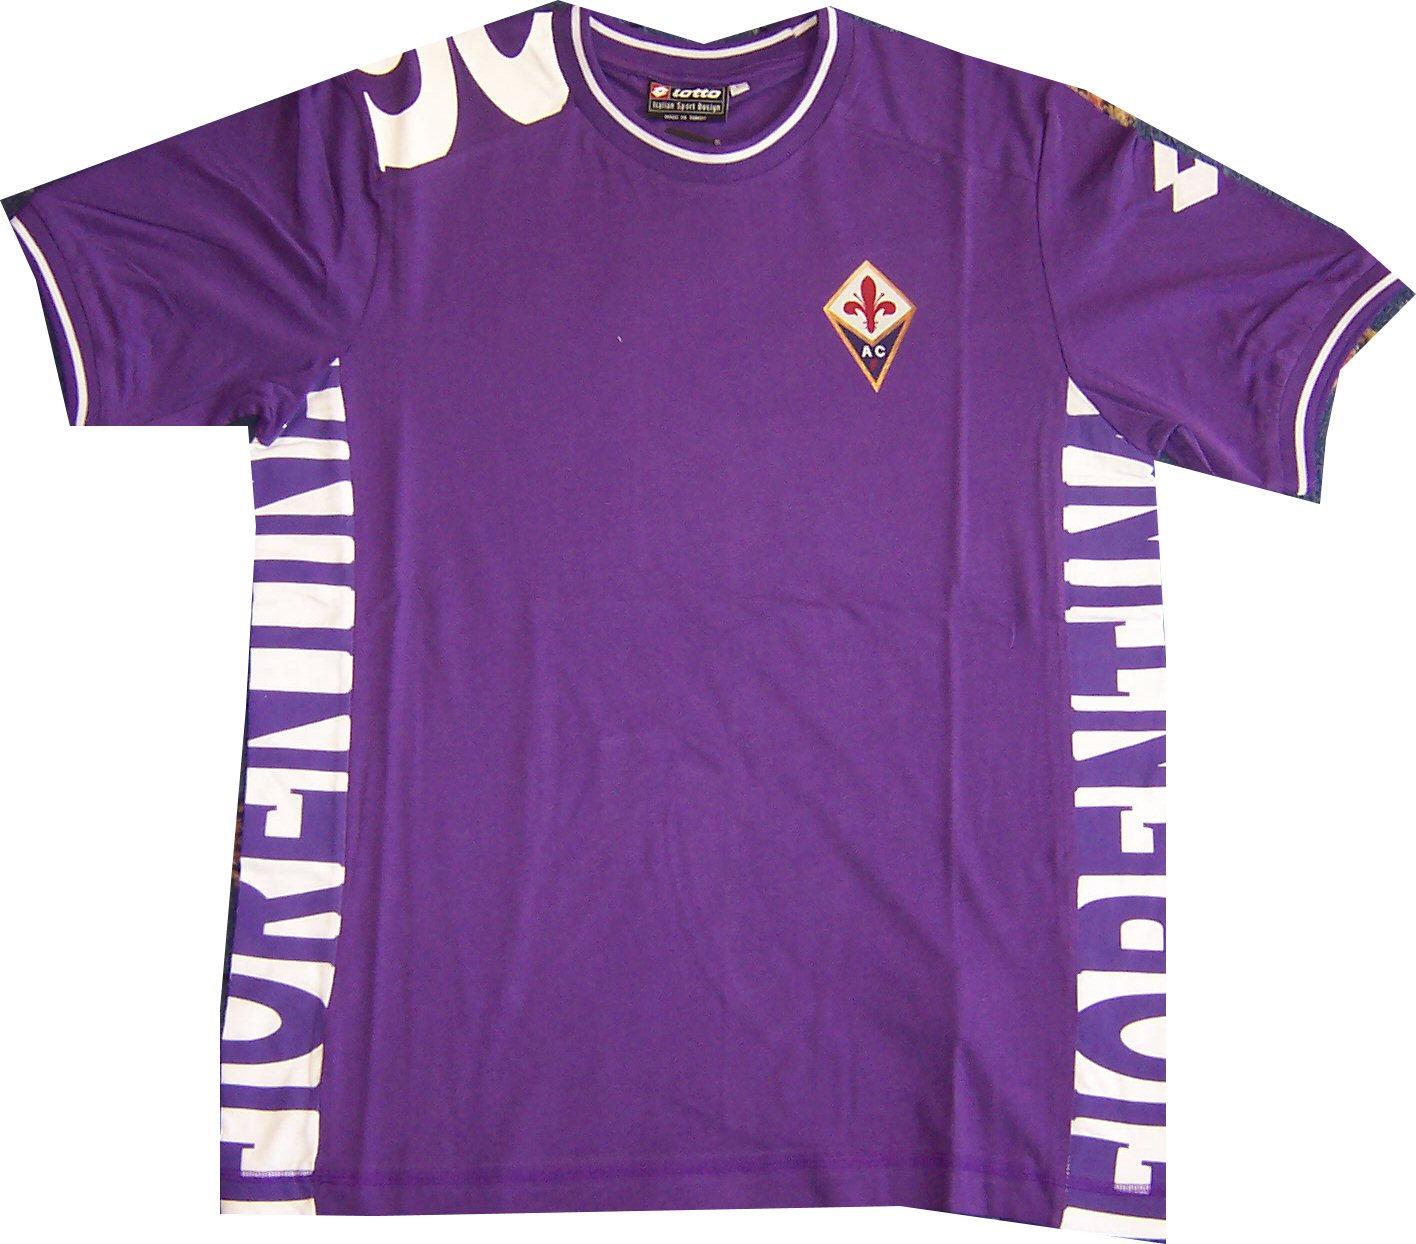 Italian teams Fiorentina Lotto 06-07 Fiorentina T-Shirt (purple)